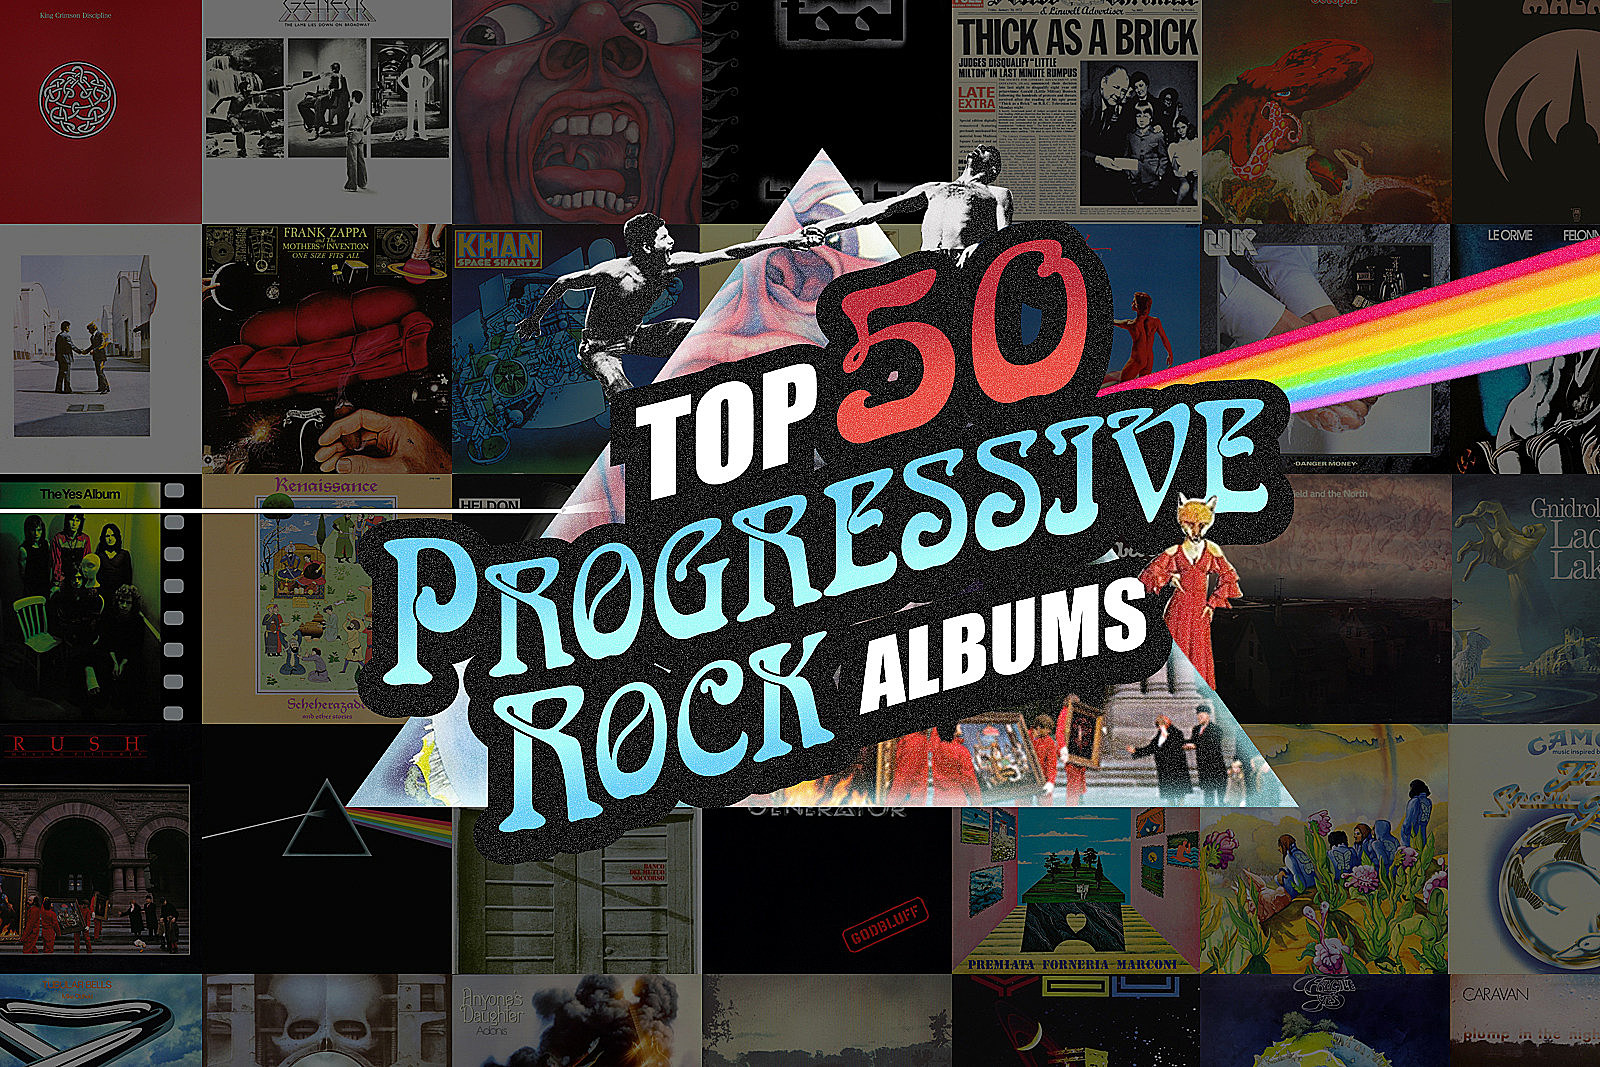 The 9 bands Frank Zappa said that were not Progressive Rock